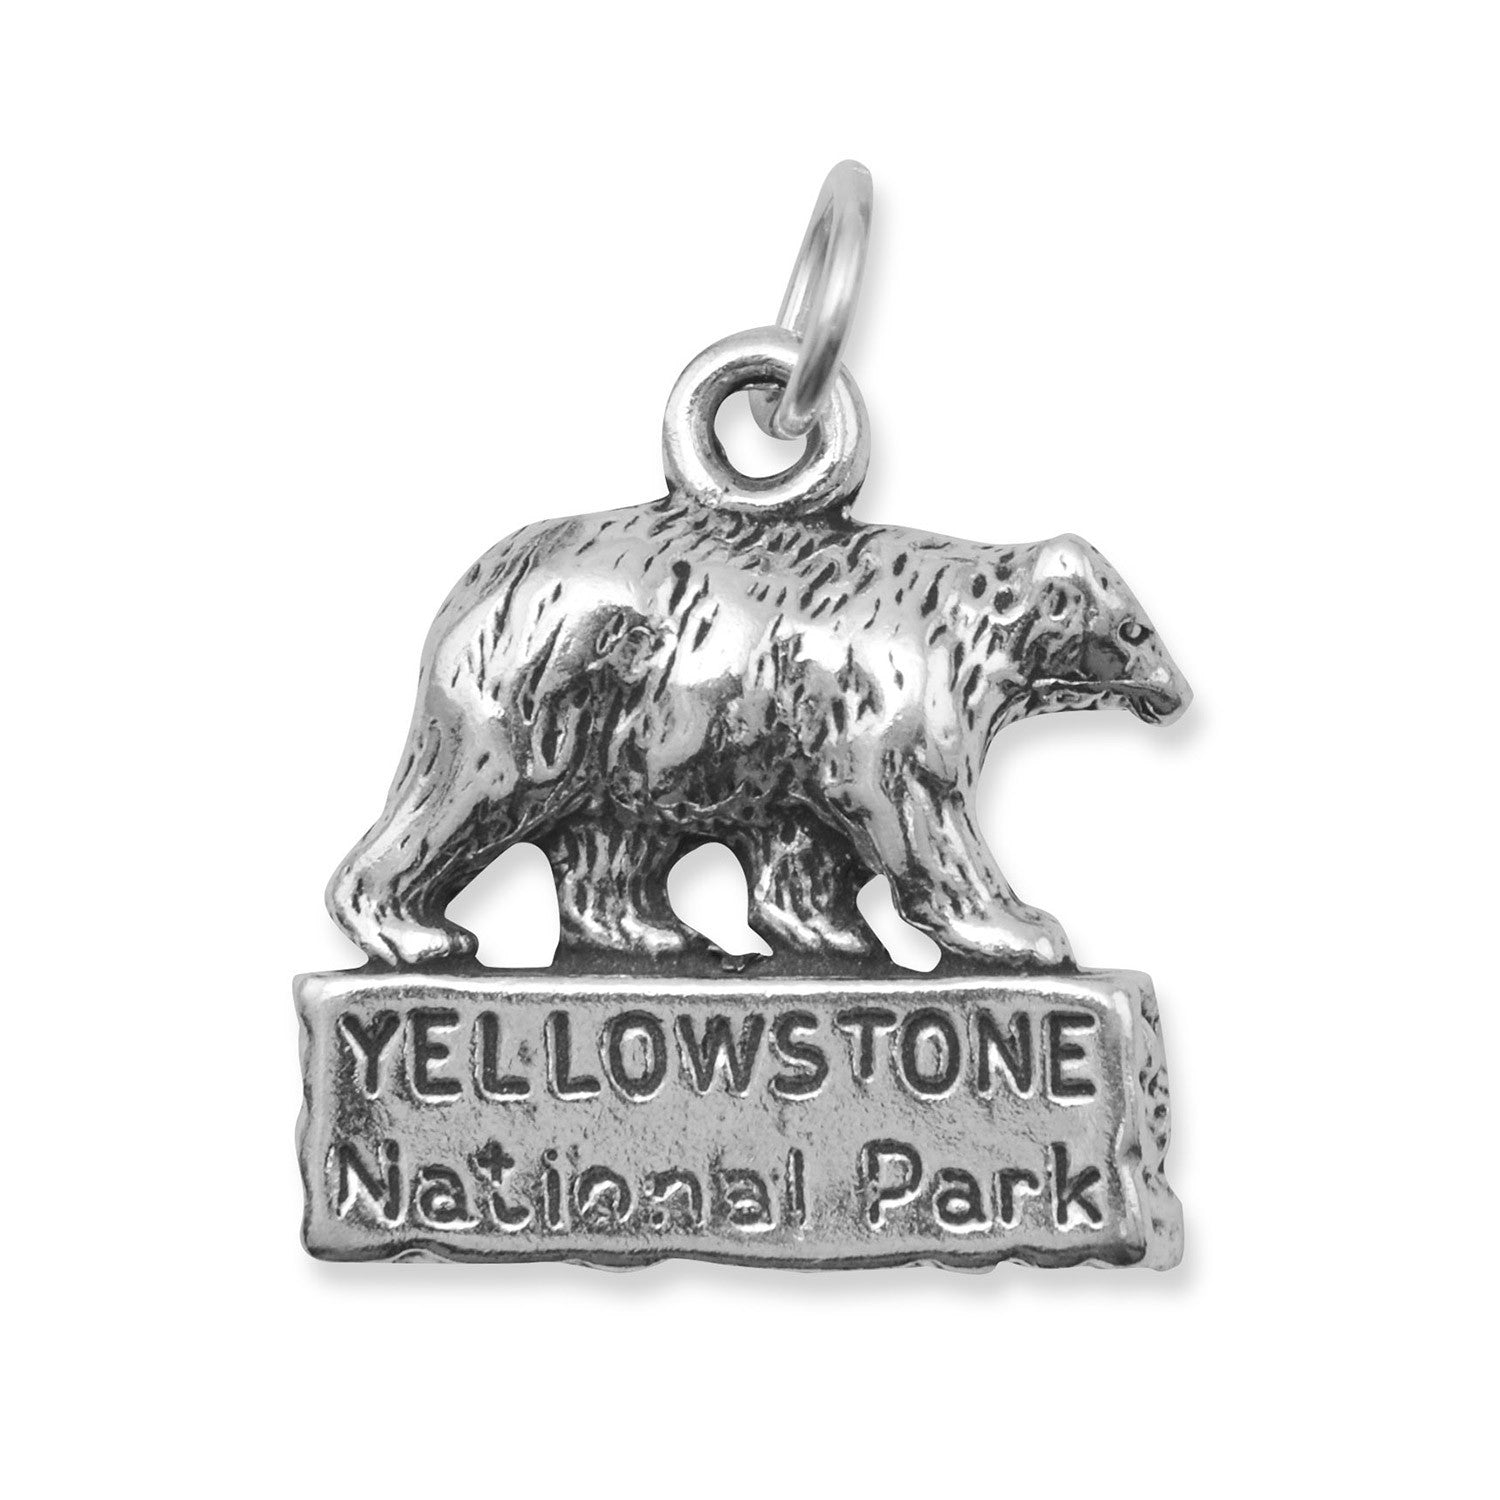 Yellowstone National Park Charm